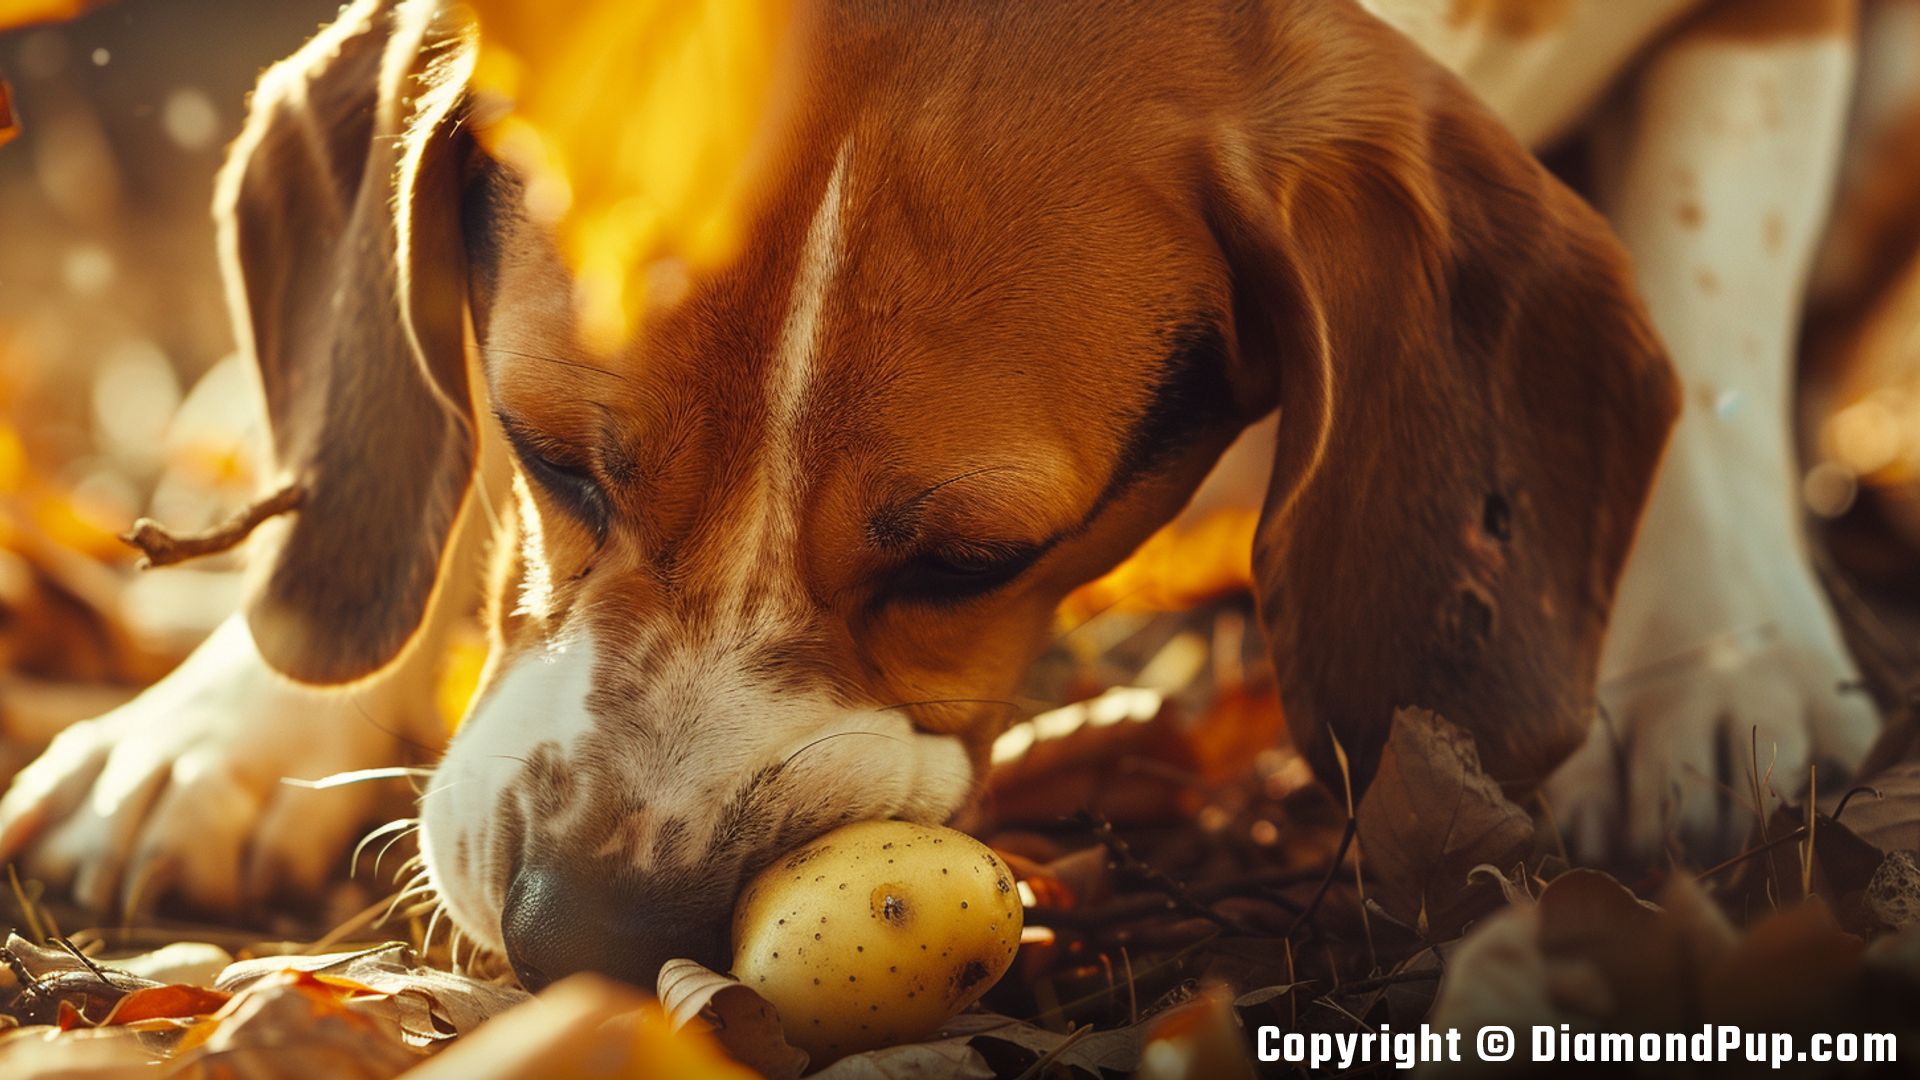 Photo of a Playful Beagle Snacking on Potato